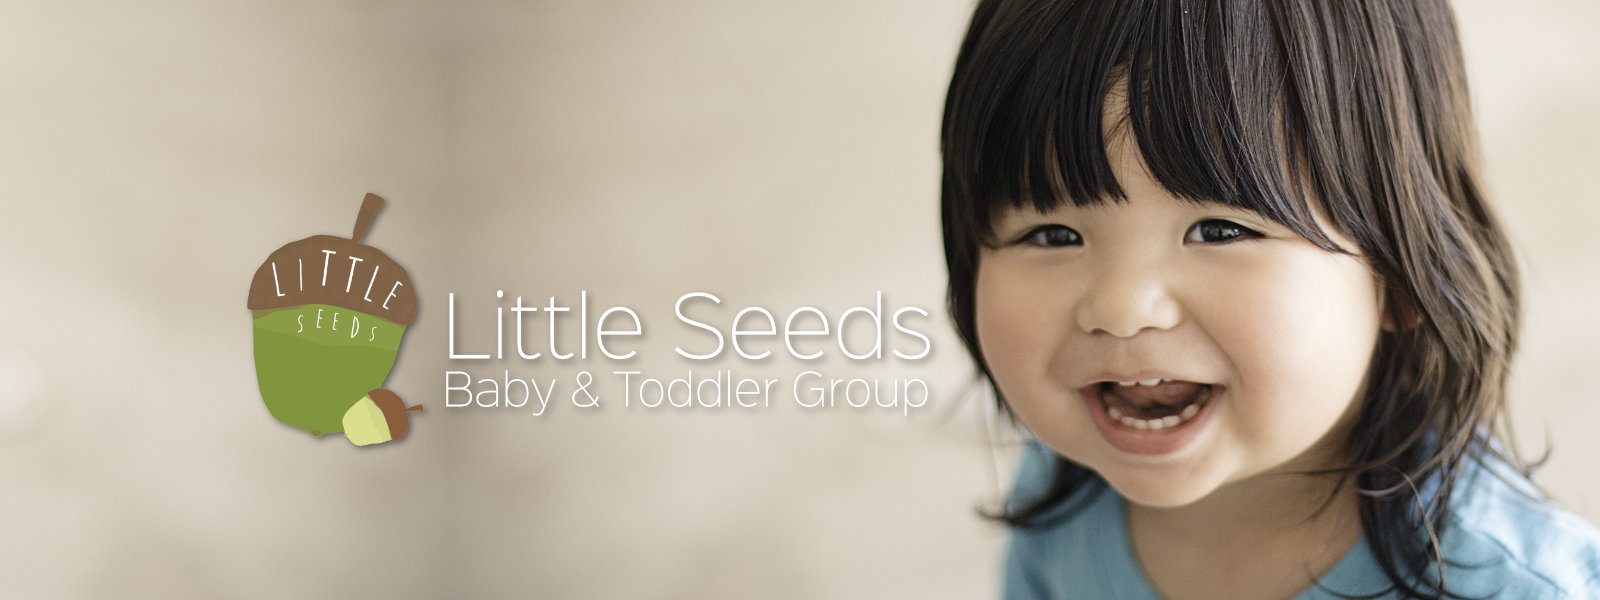 Banner advertising Little Seeds, toddler group.